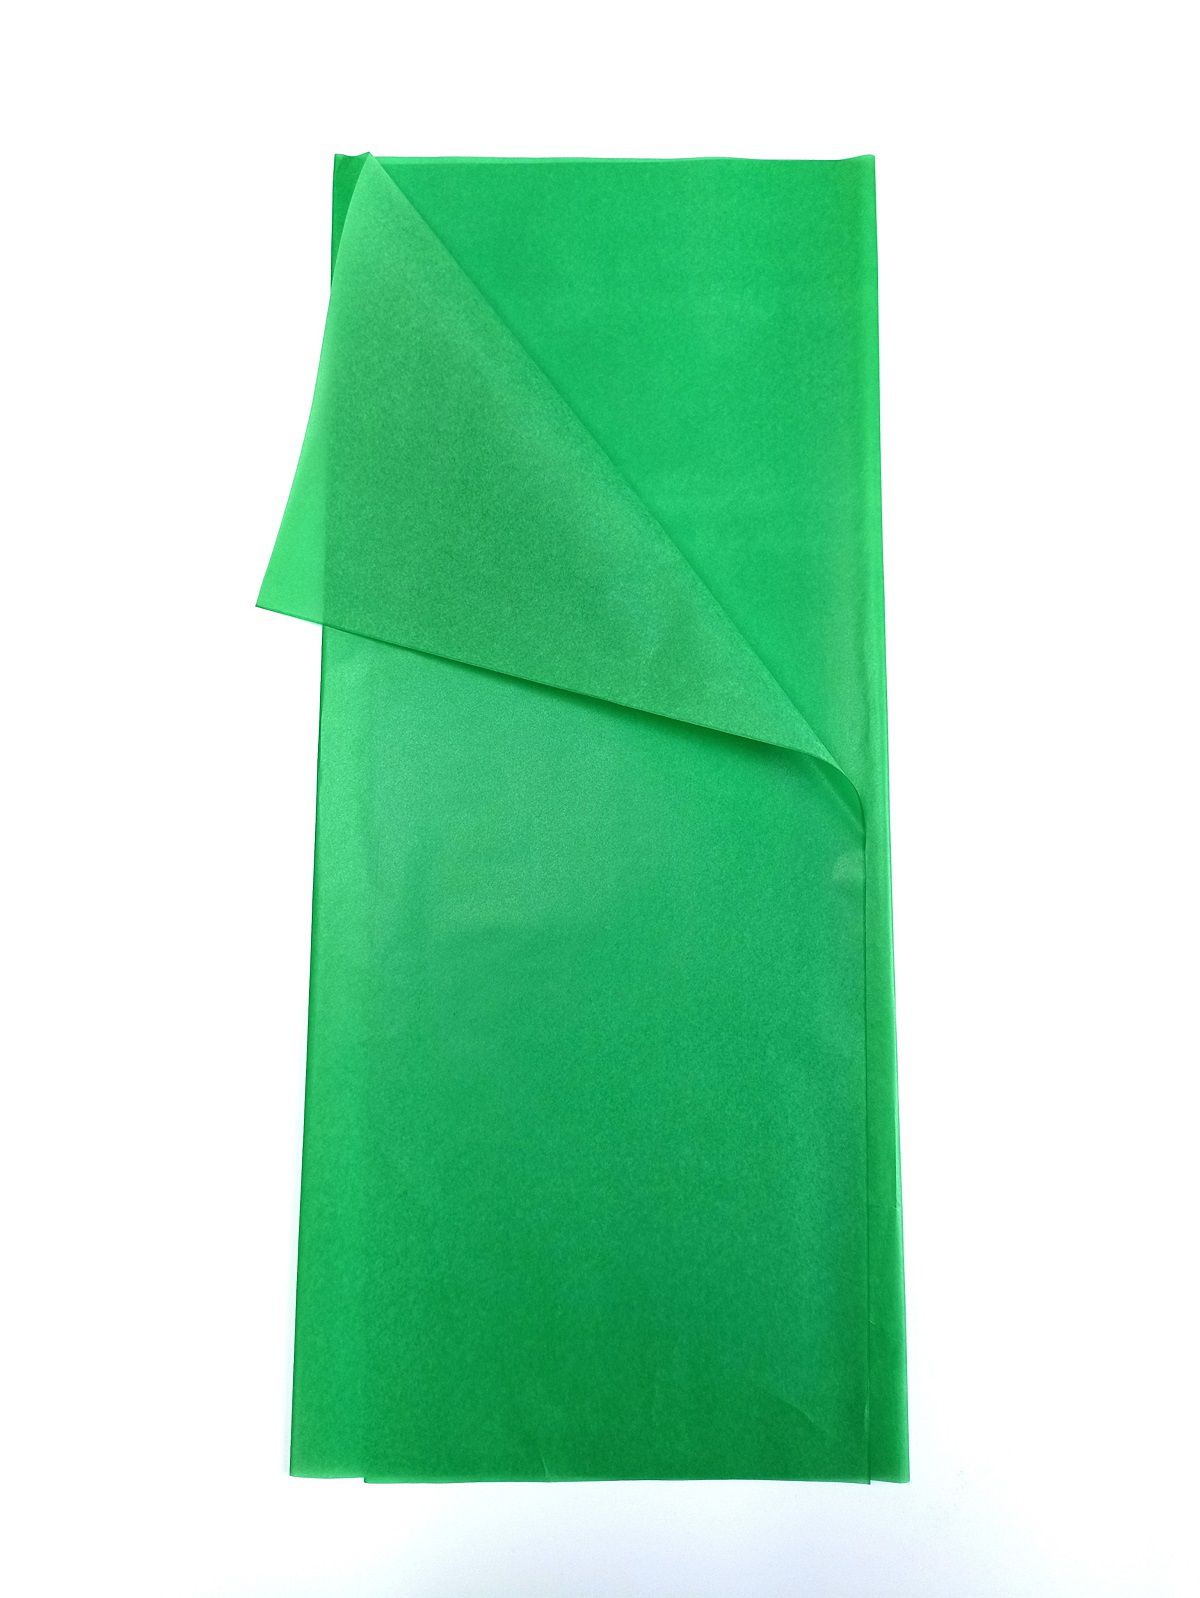 Papel de Seda 48x60cm Pacote 100 Folhas Verde Escuro | IMBALLA - Imballa